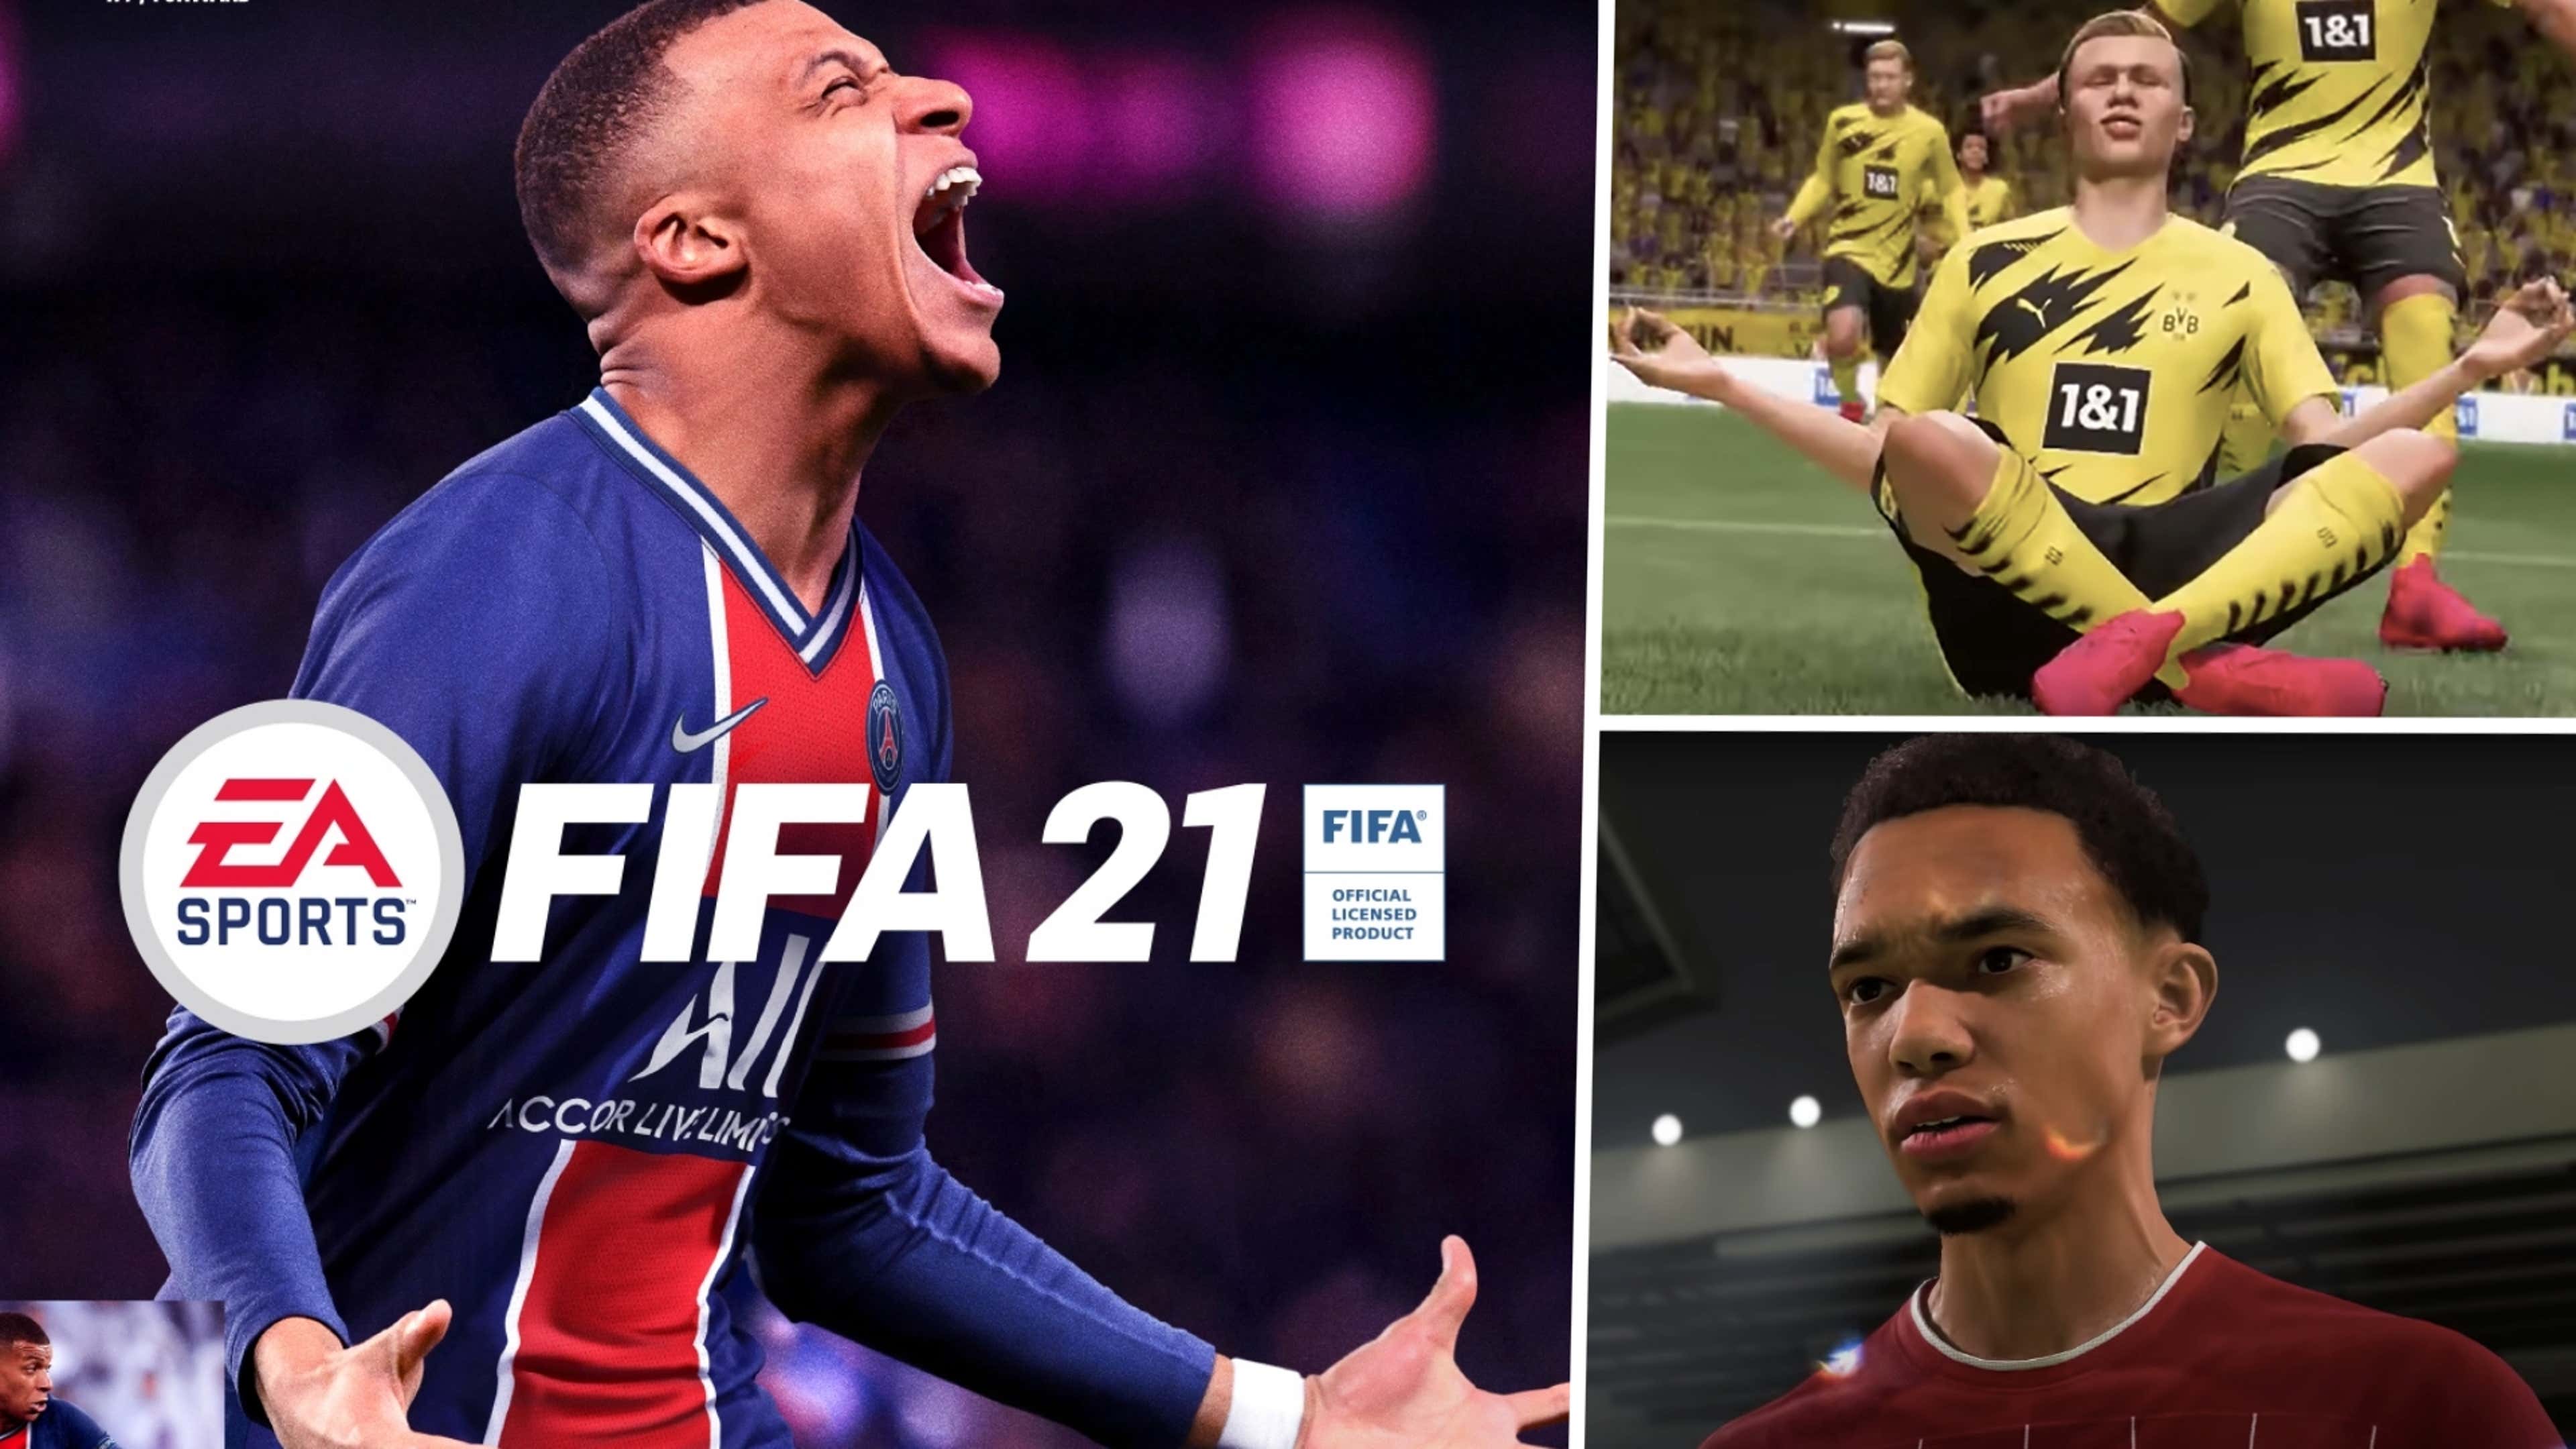 FIFA 12 Ultimate Team Web App Available - UltimateFIFA